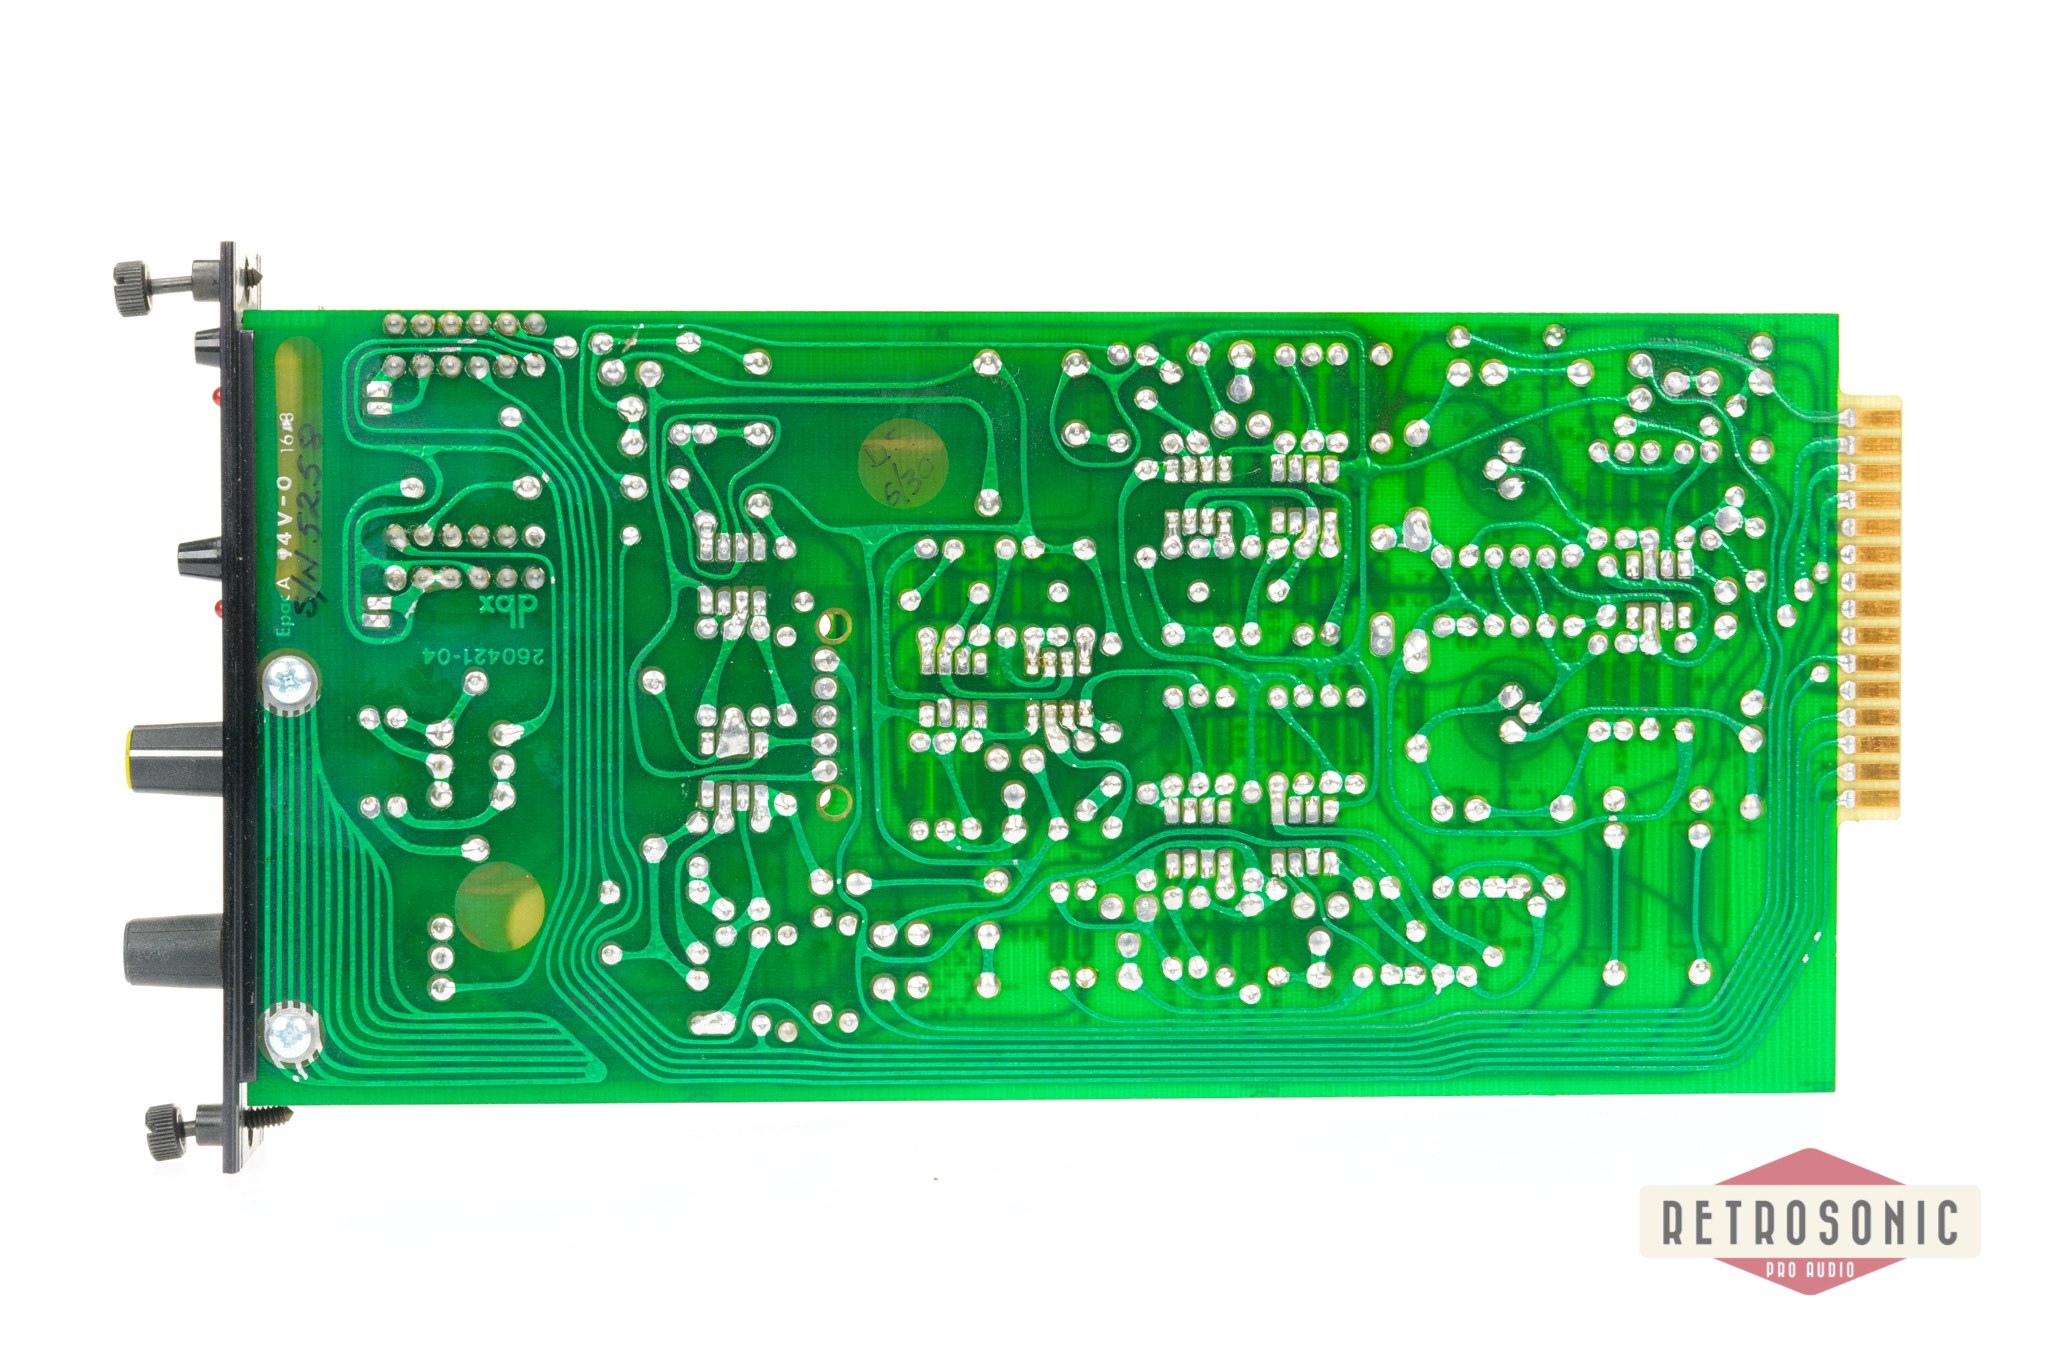 DBX 902 DE-Esser 900-series module # 1